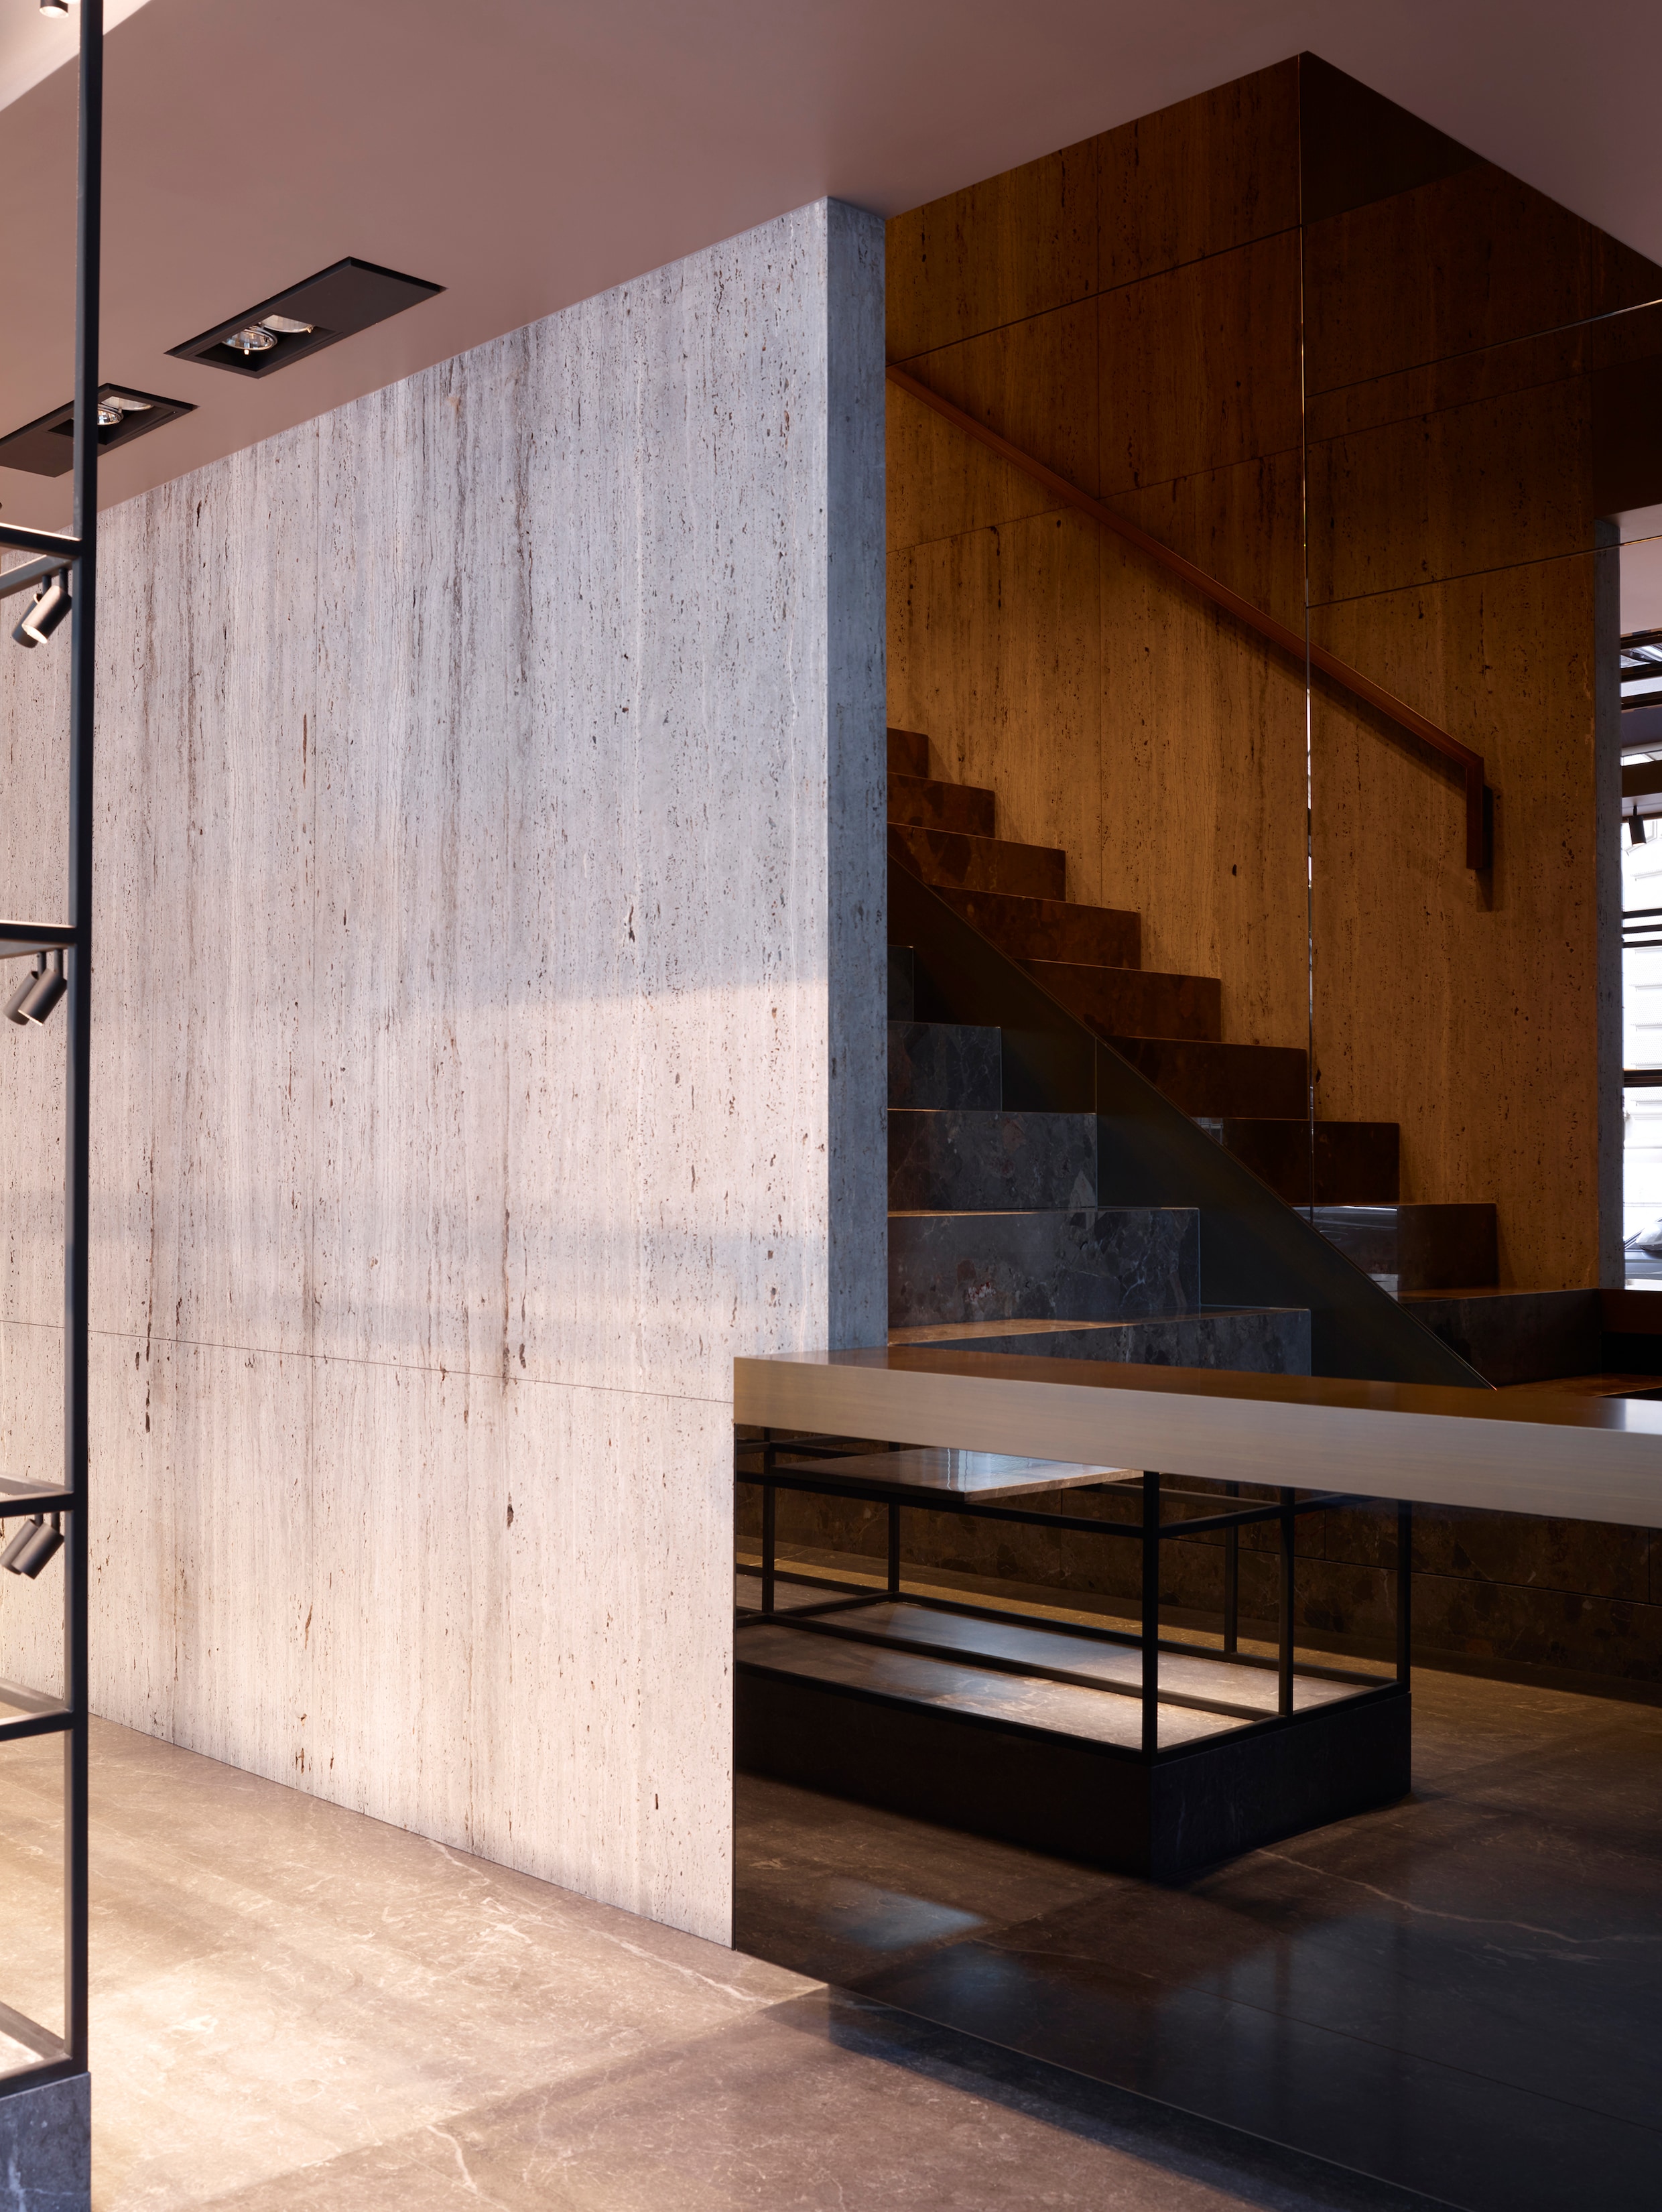 Minimalistische glamour kenmerkt het impressionante cv van architect Glenn Sestig